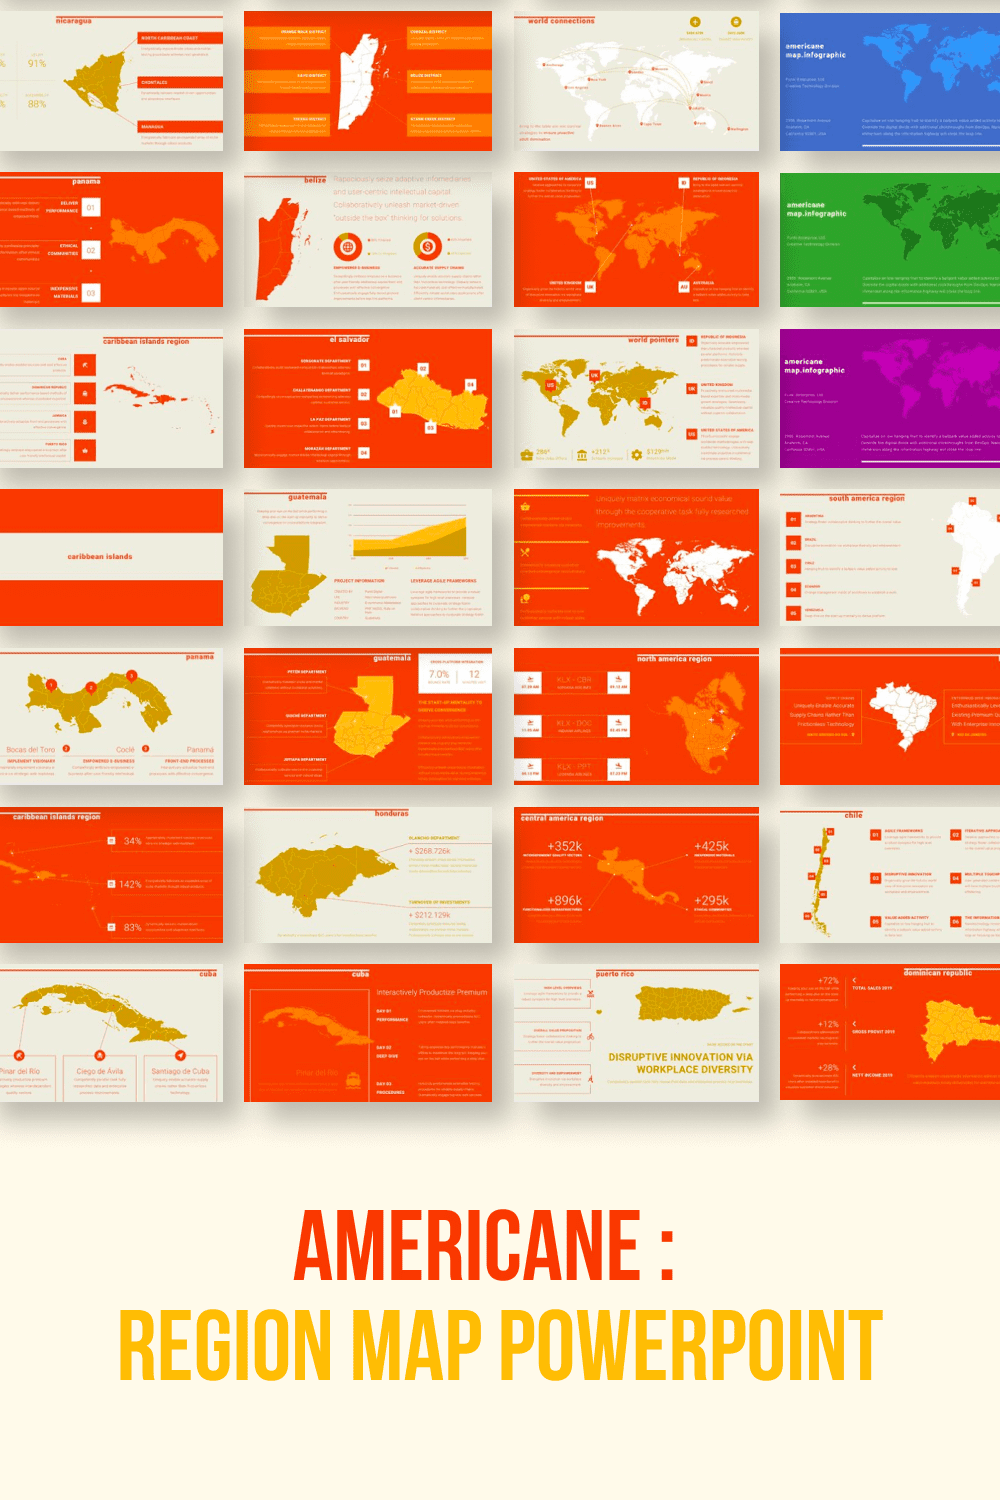 Americane : Region Map Powerpoint by MasterBundles Pinterest Collage Image.